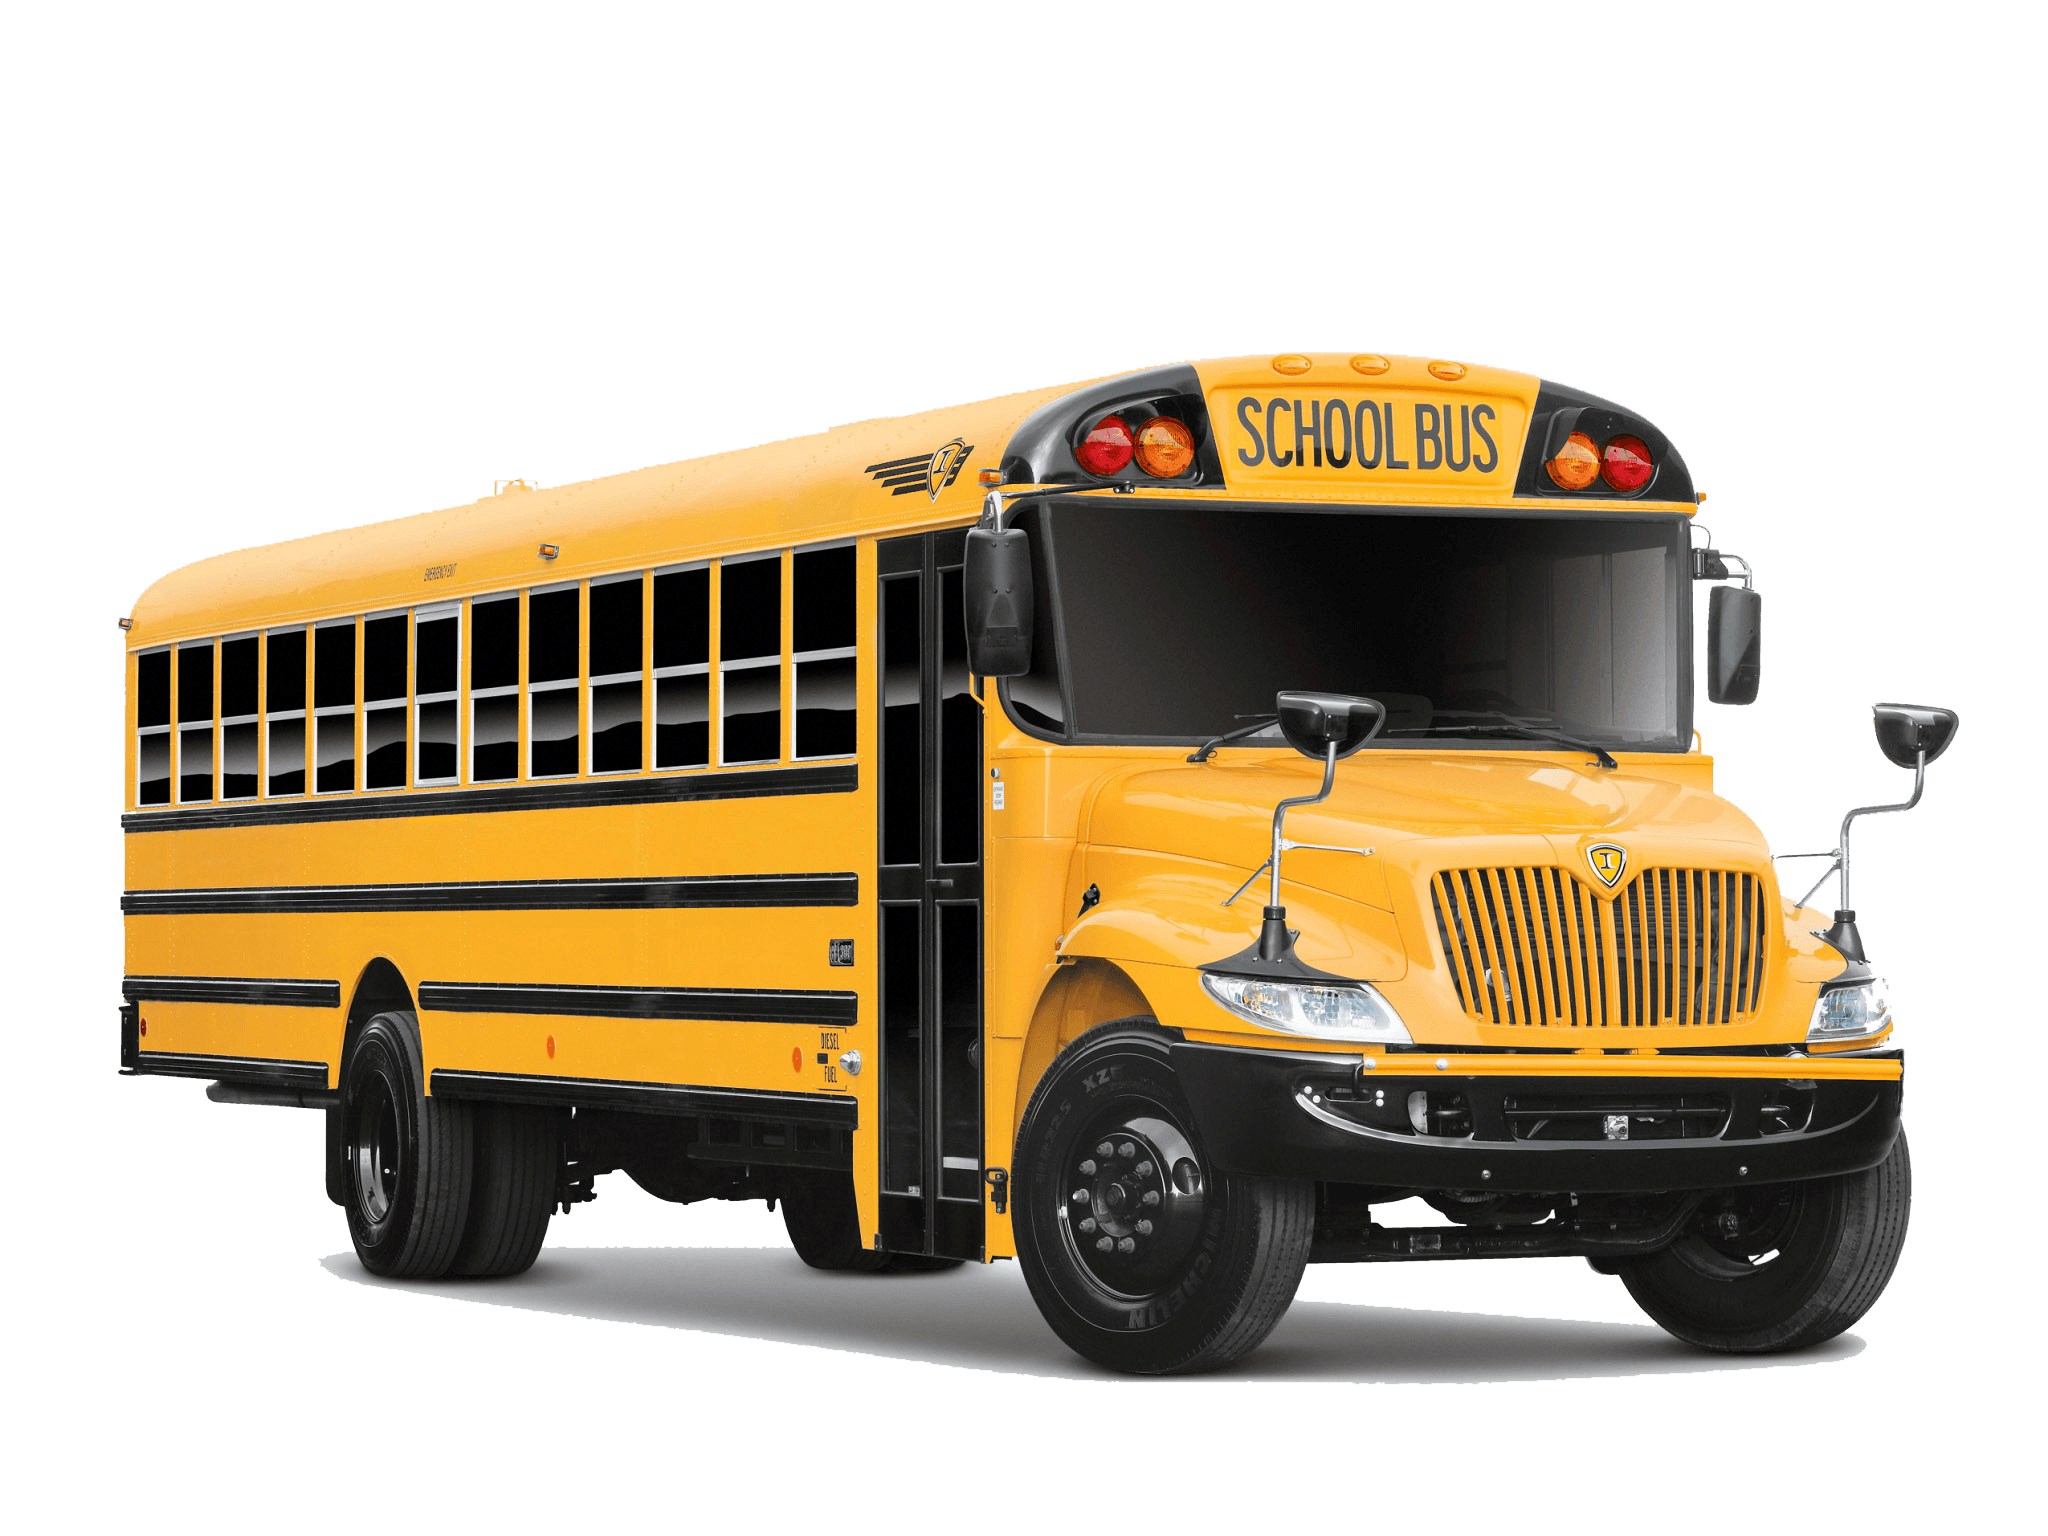 Cartoon School bus with child